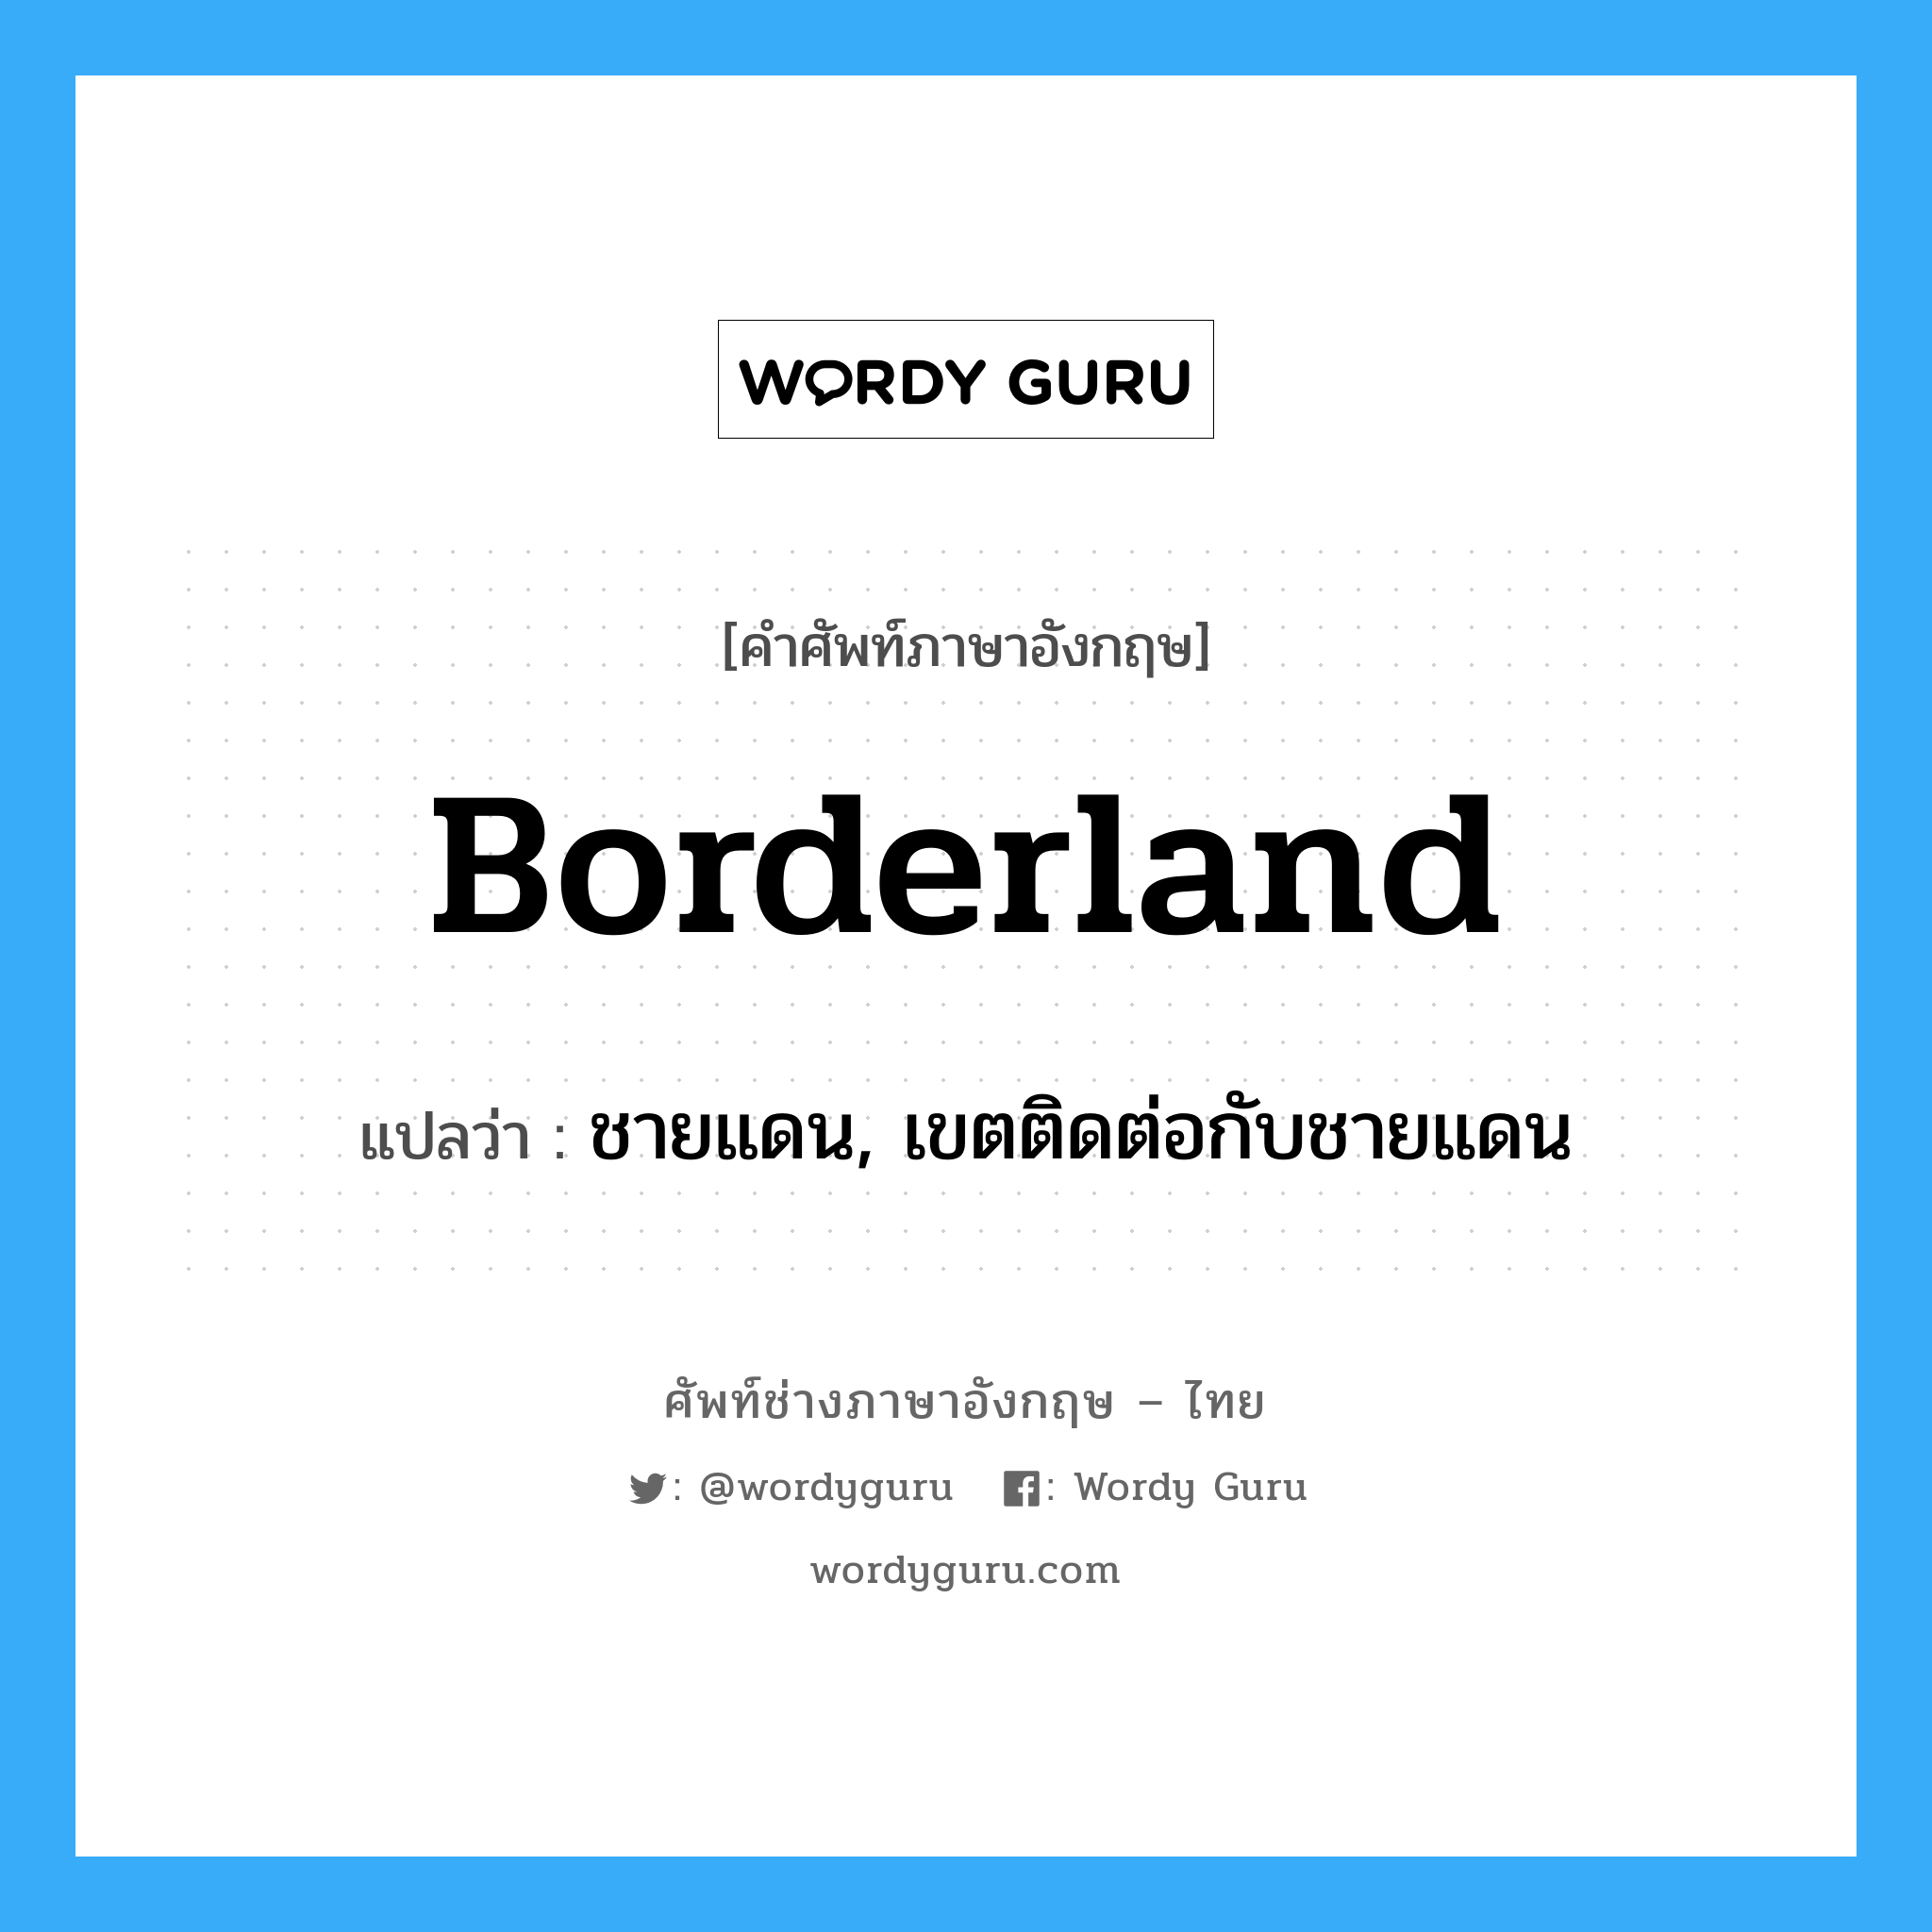 borderland แปลว่า?, คำศัพท์ช่างภาษาอังกฤษ - ไทย borderland คำศัพท์ภาษาอังกฤษ borderland แปลว่า ชายแดน, เขตติดต่อกับชายแดน